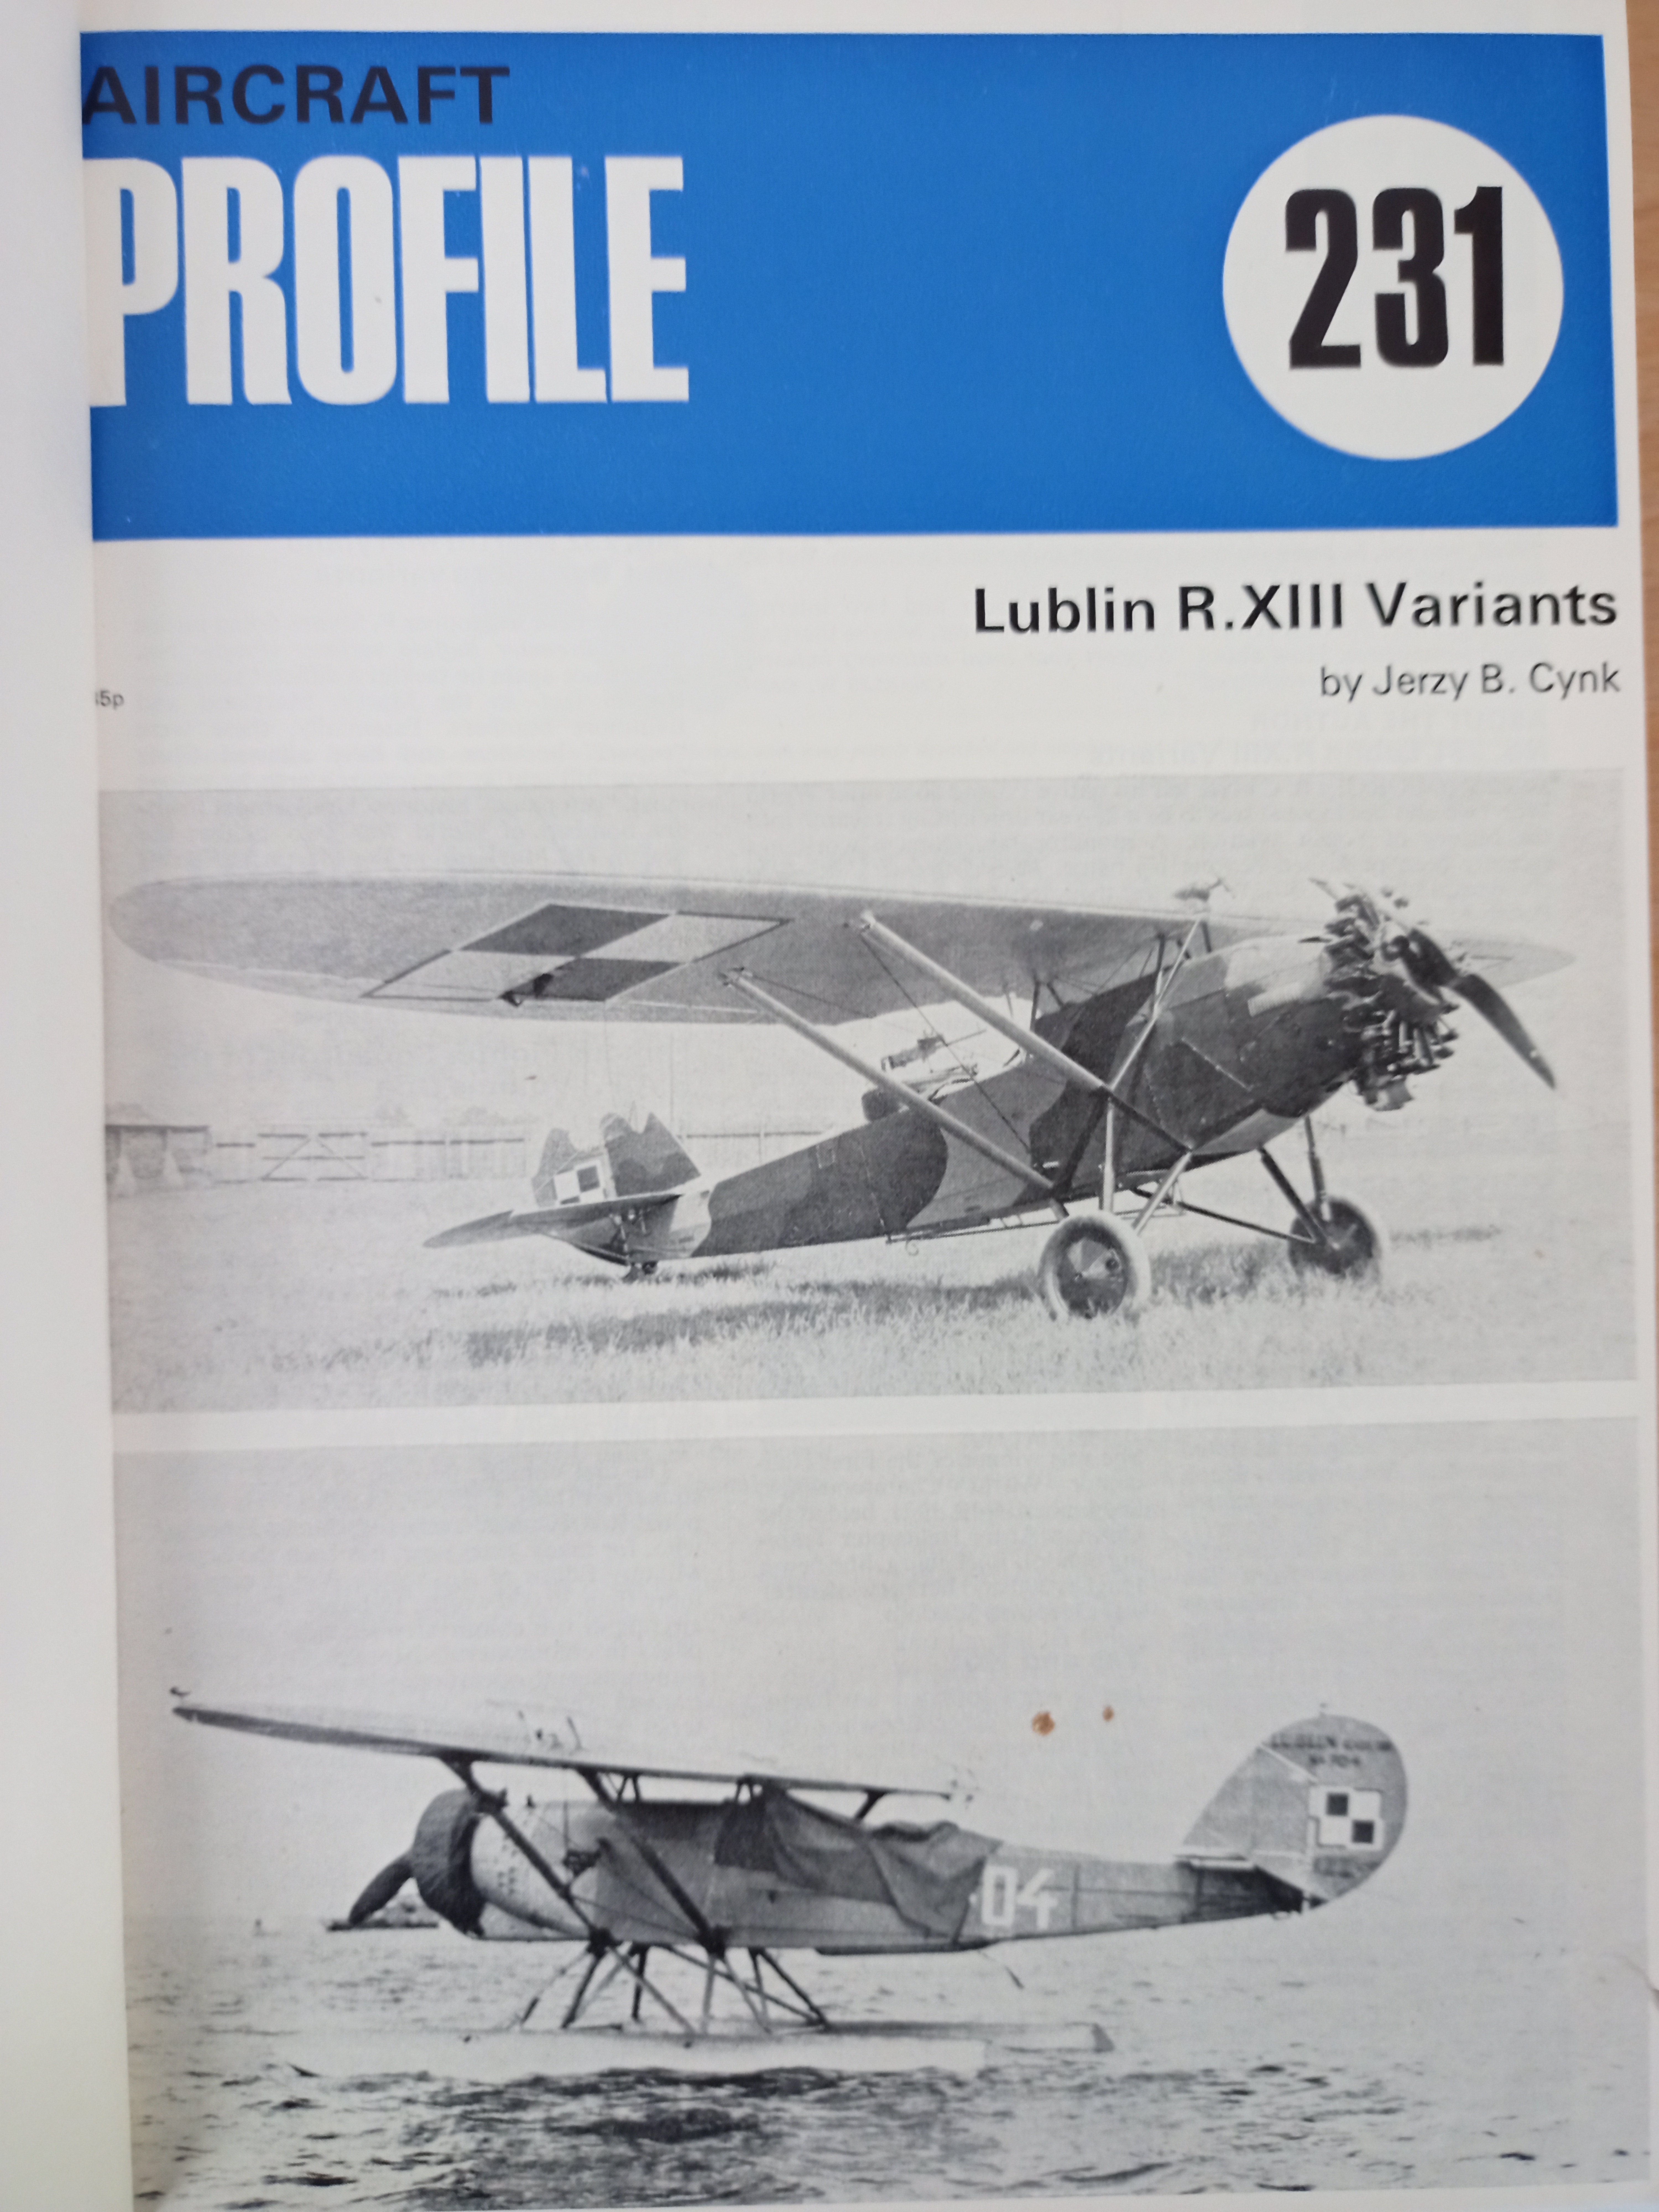 Profile Publications (Deutsches Segelflugmuseum mit Modellflug CC BY-NC-SA)